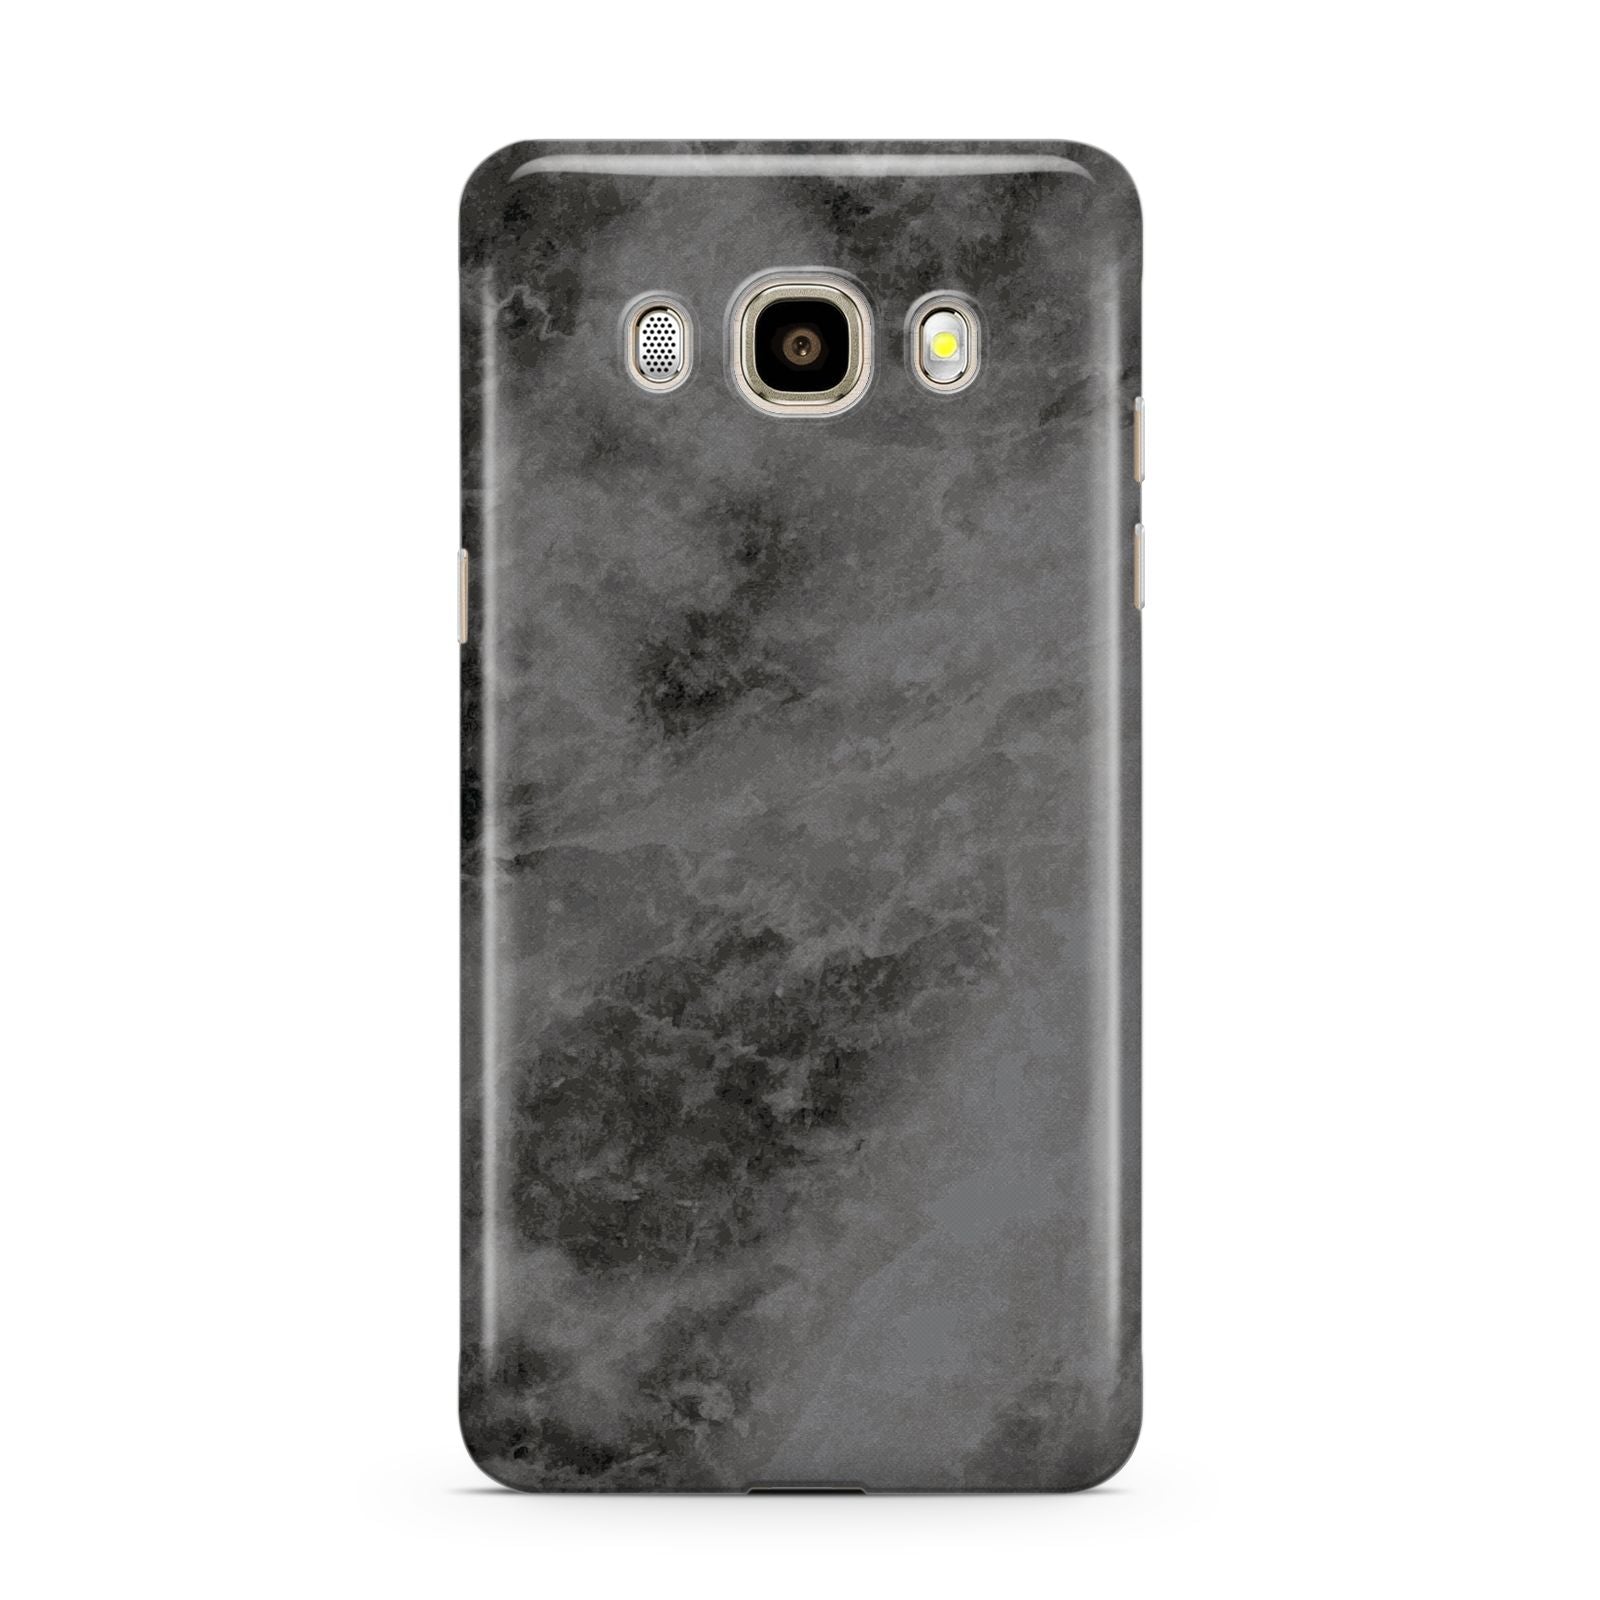 Faux Marble Grey Black Samsung Galaxy J7 2016 Case on gold phone